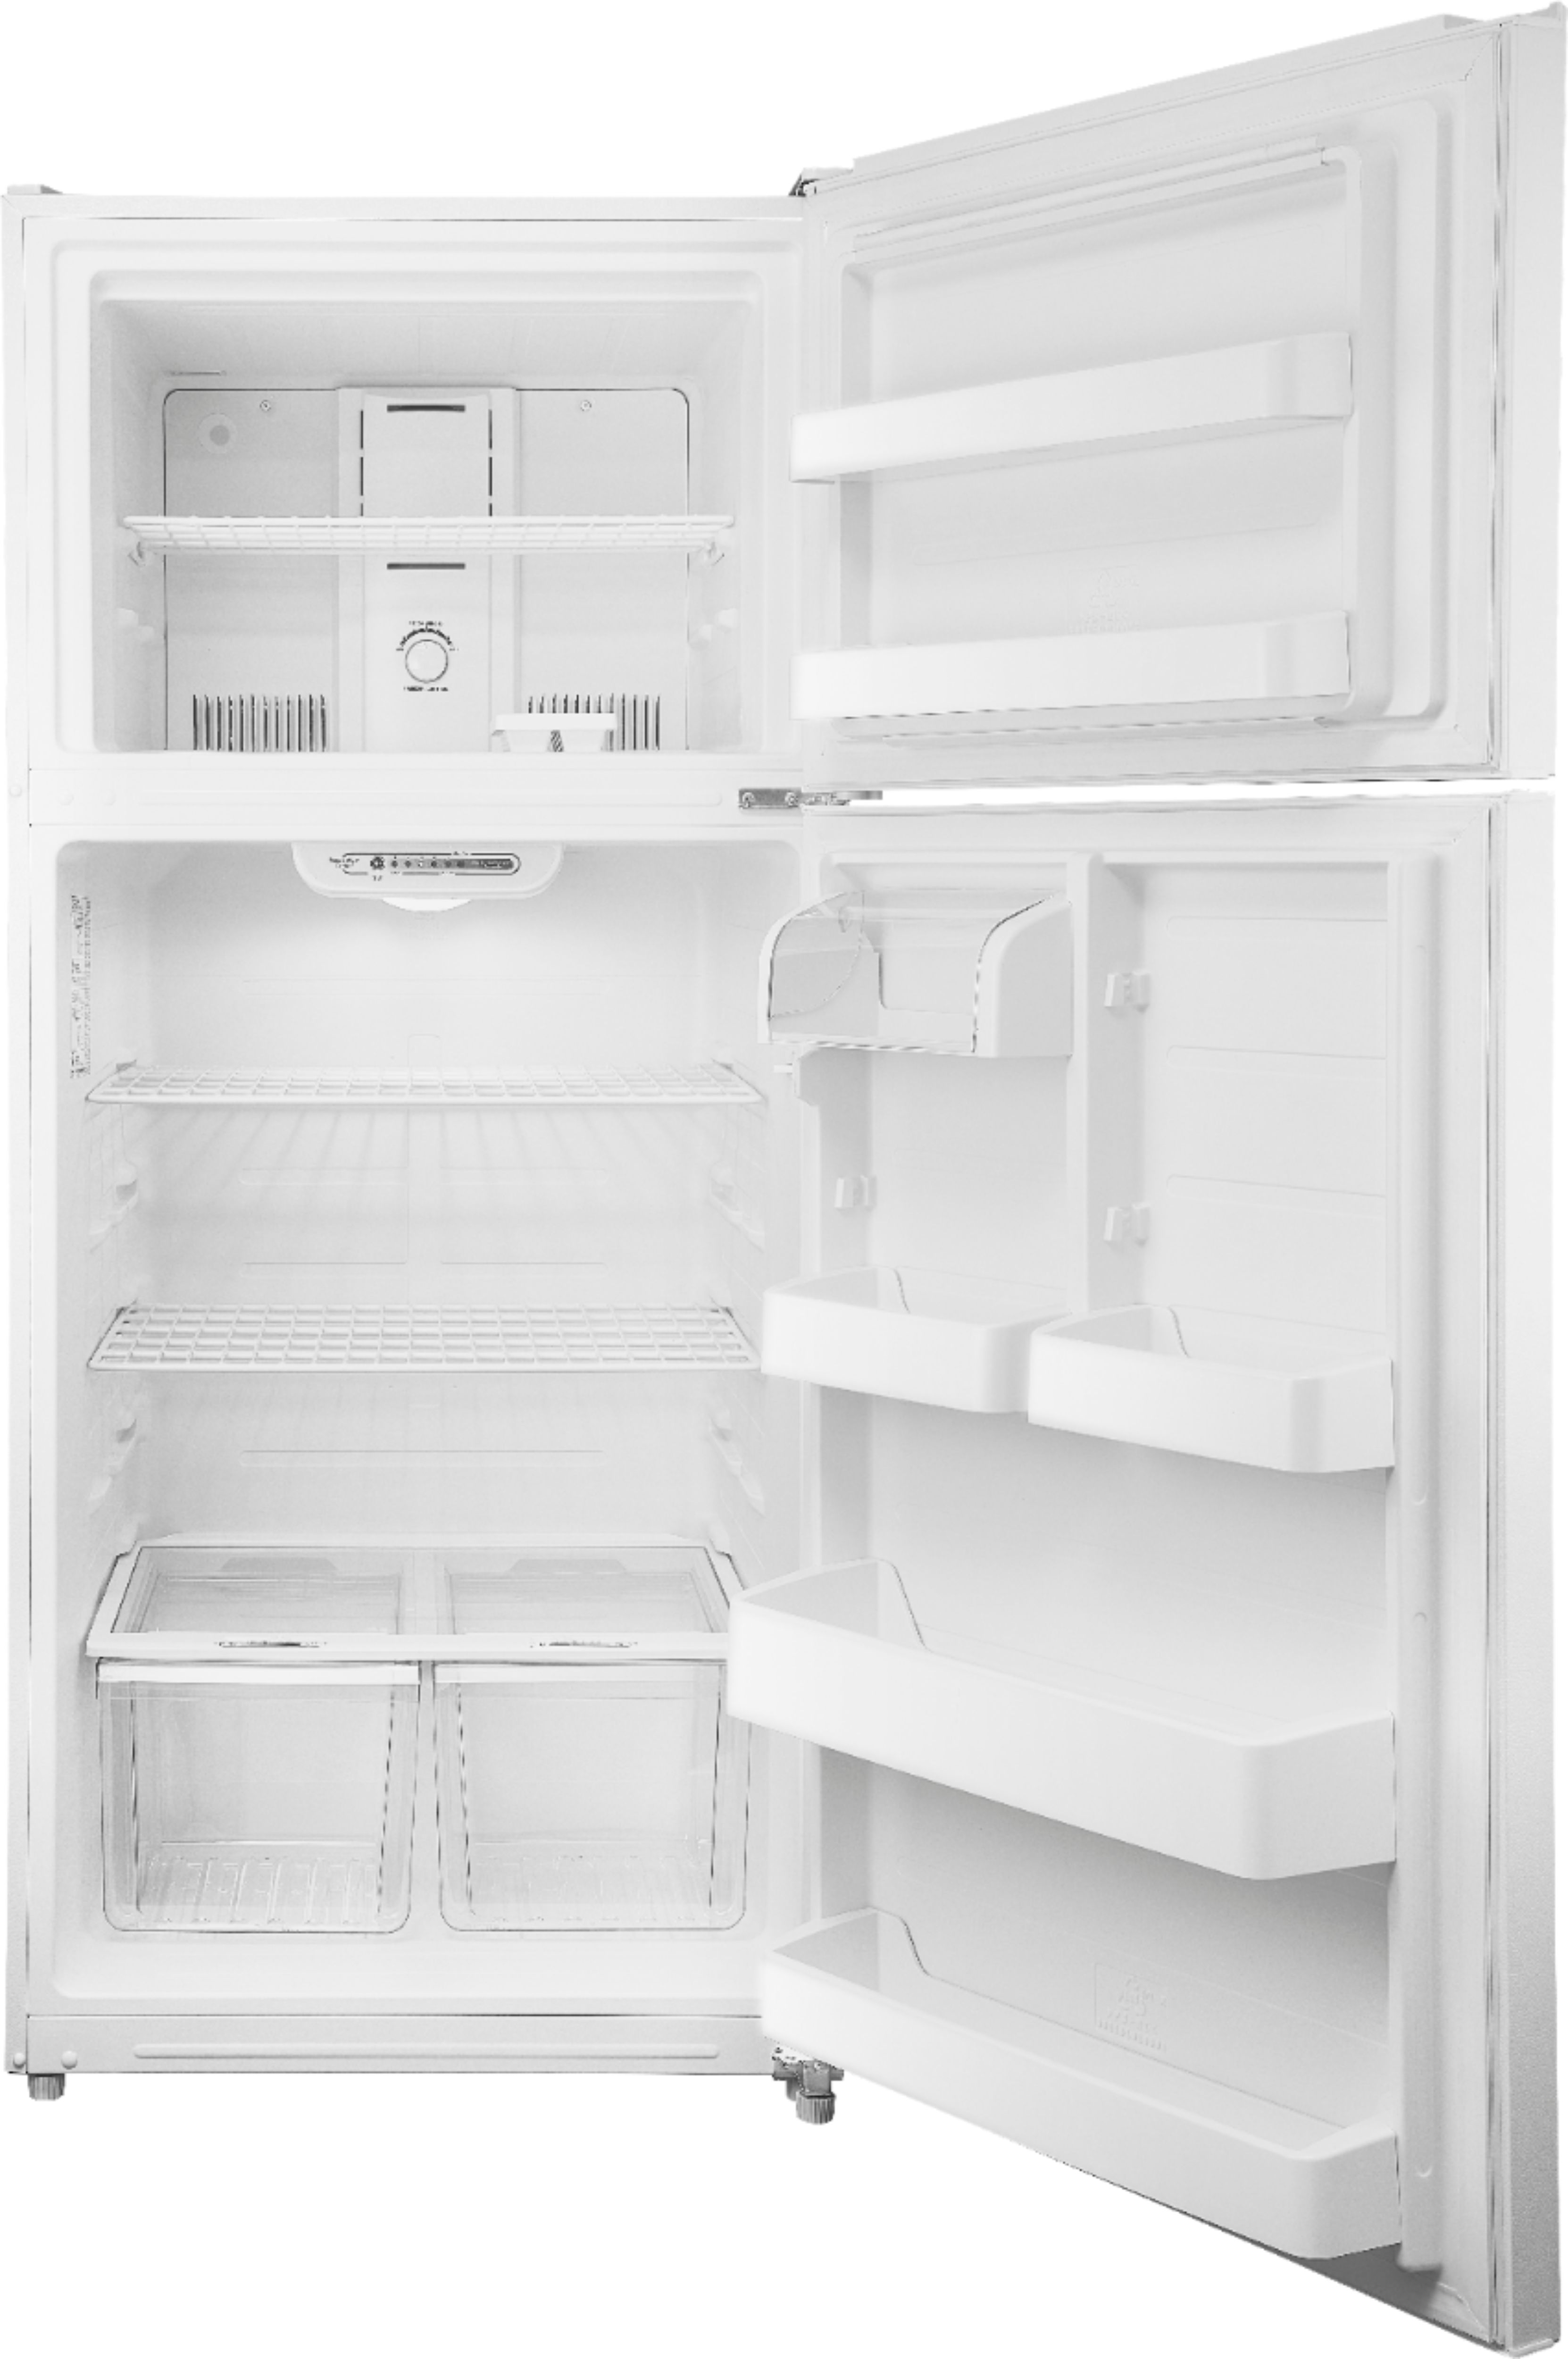 Best Buy: Escali Digital Refrigerator/Freezer Thermometer White DHF1